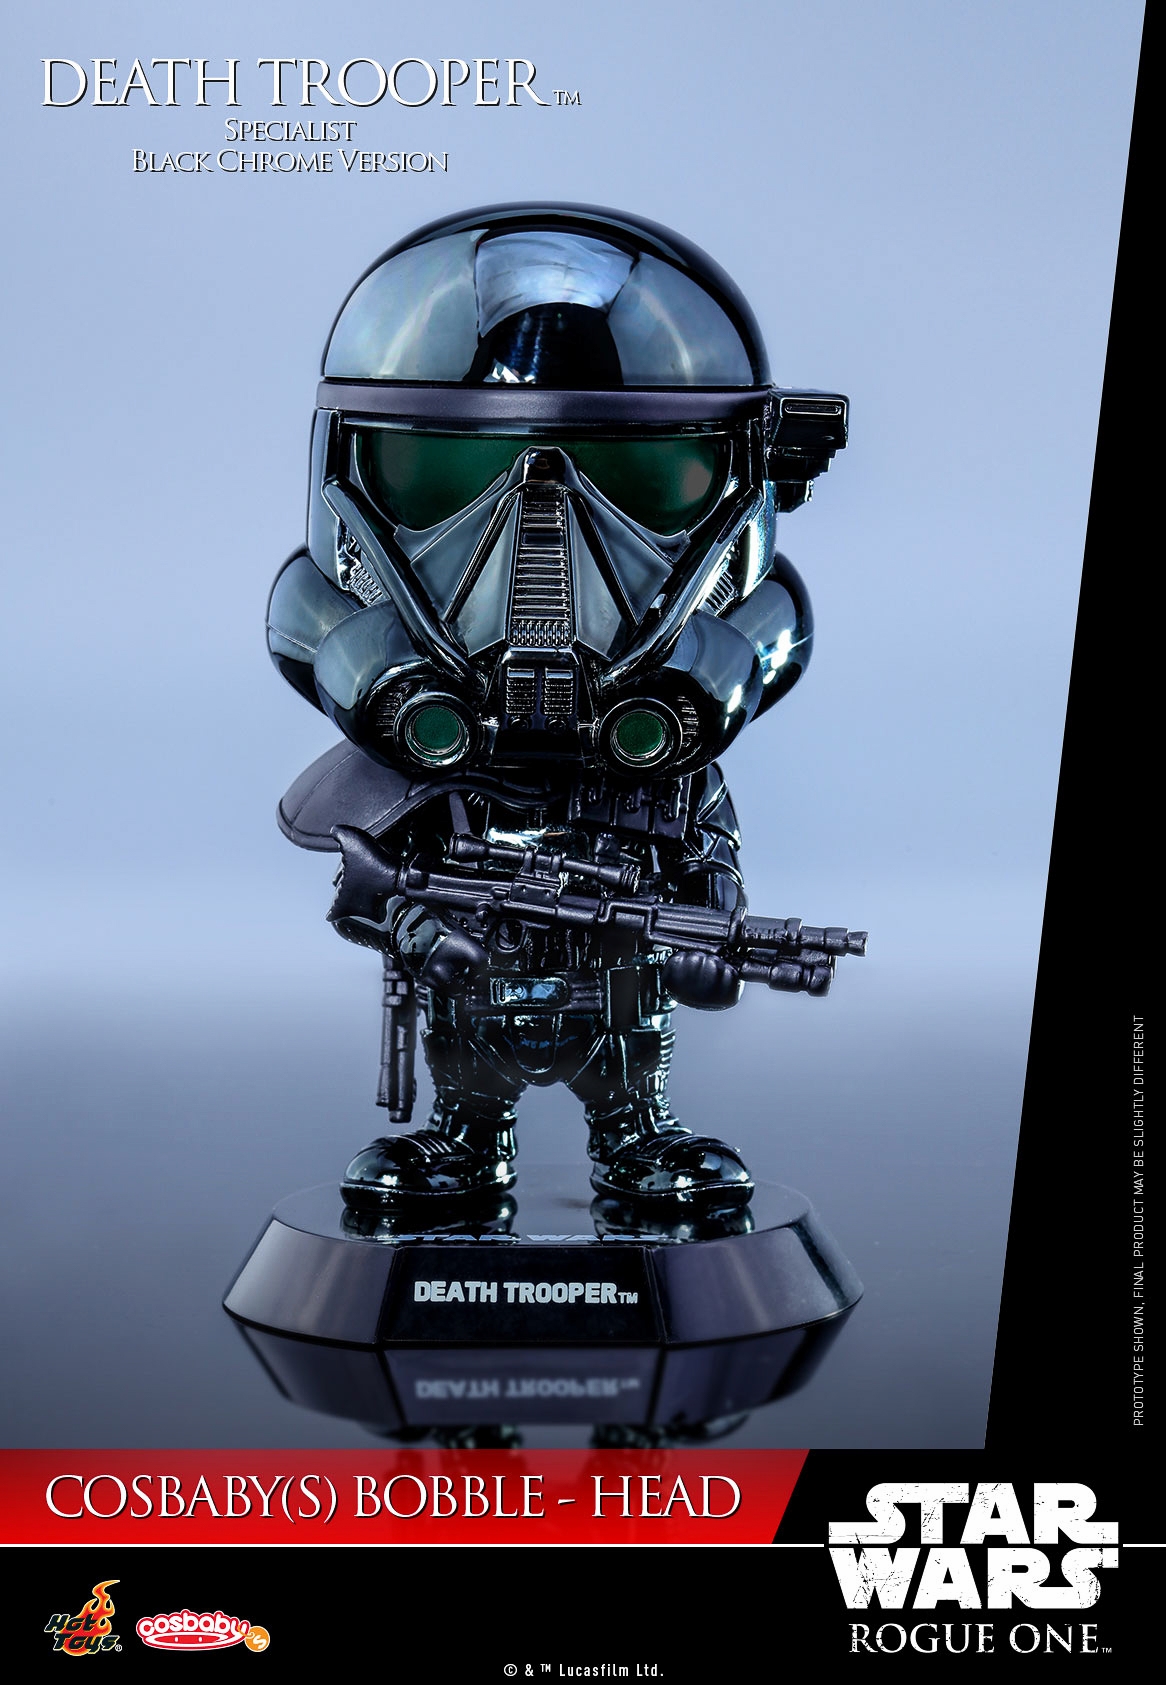 Hot-Toys-COSB341-Death-Trooper-Specialist-Black-Chrome-001.jpg